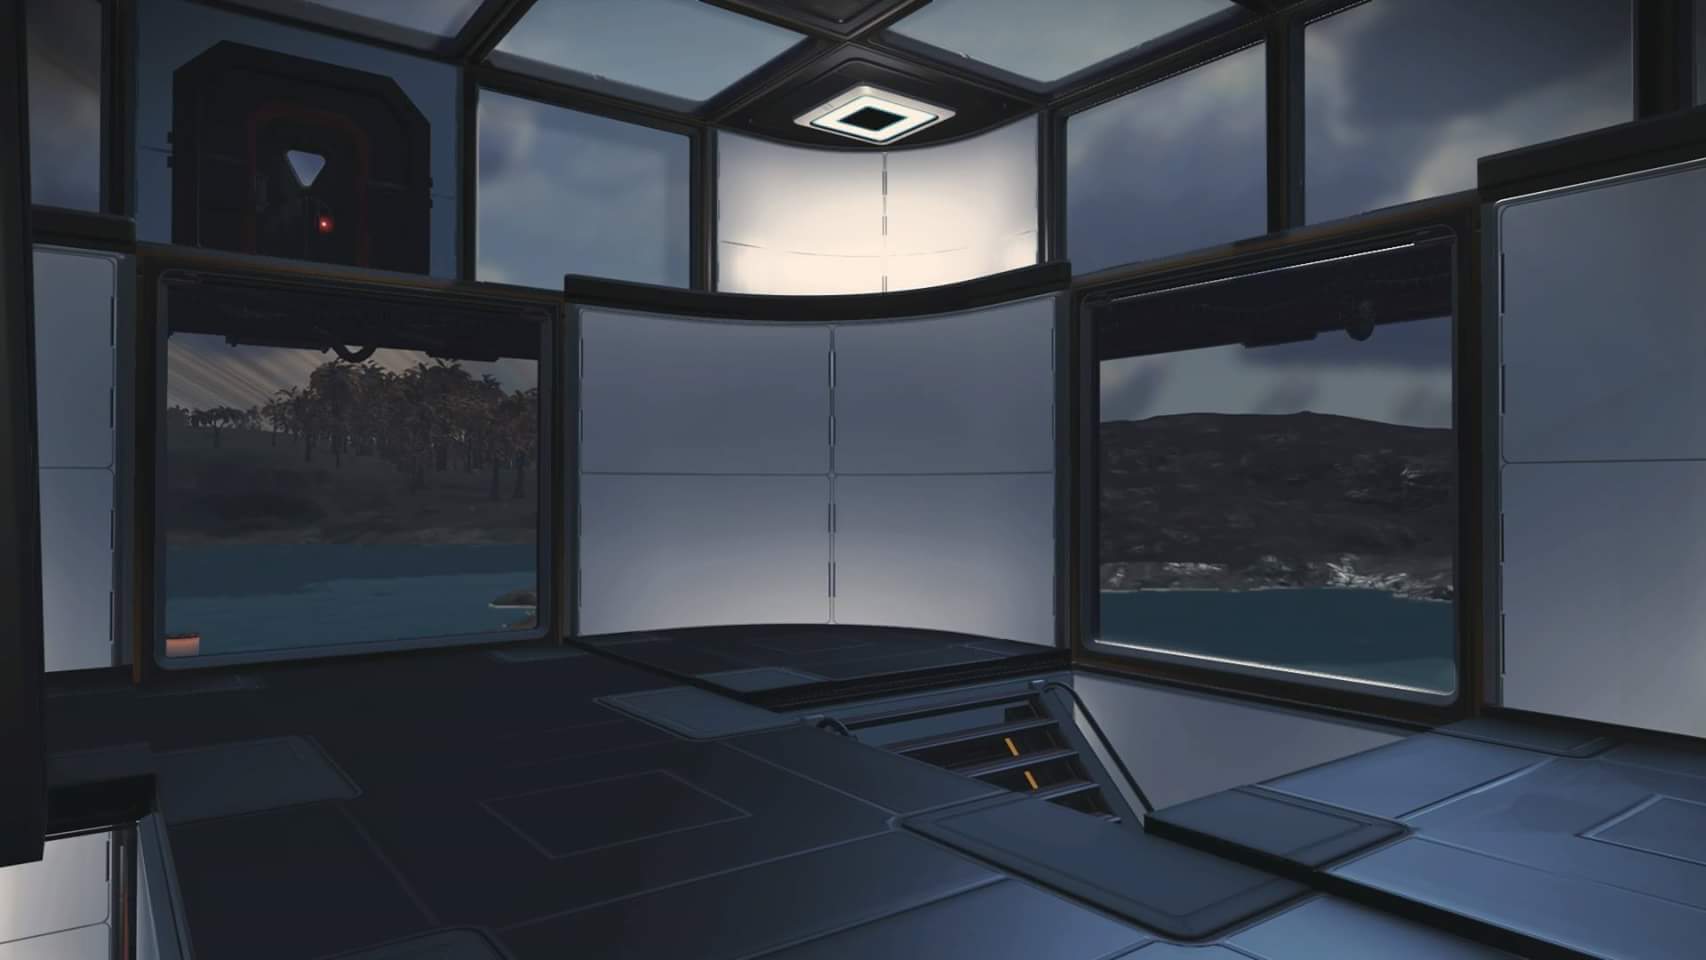 Base Tip Cuboid Rooms No Man S Sky Amino Hub Amino